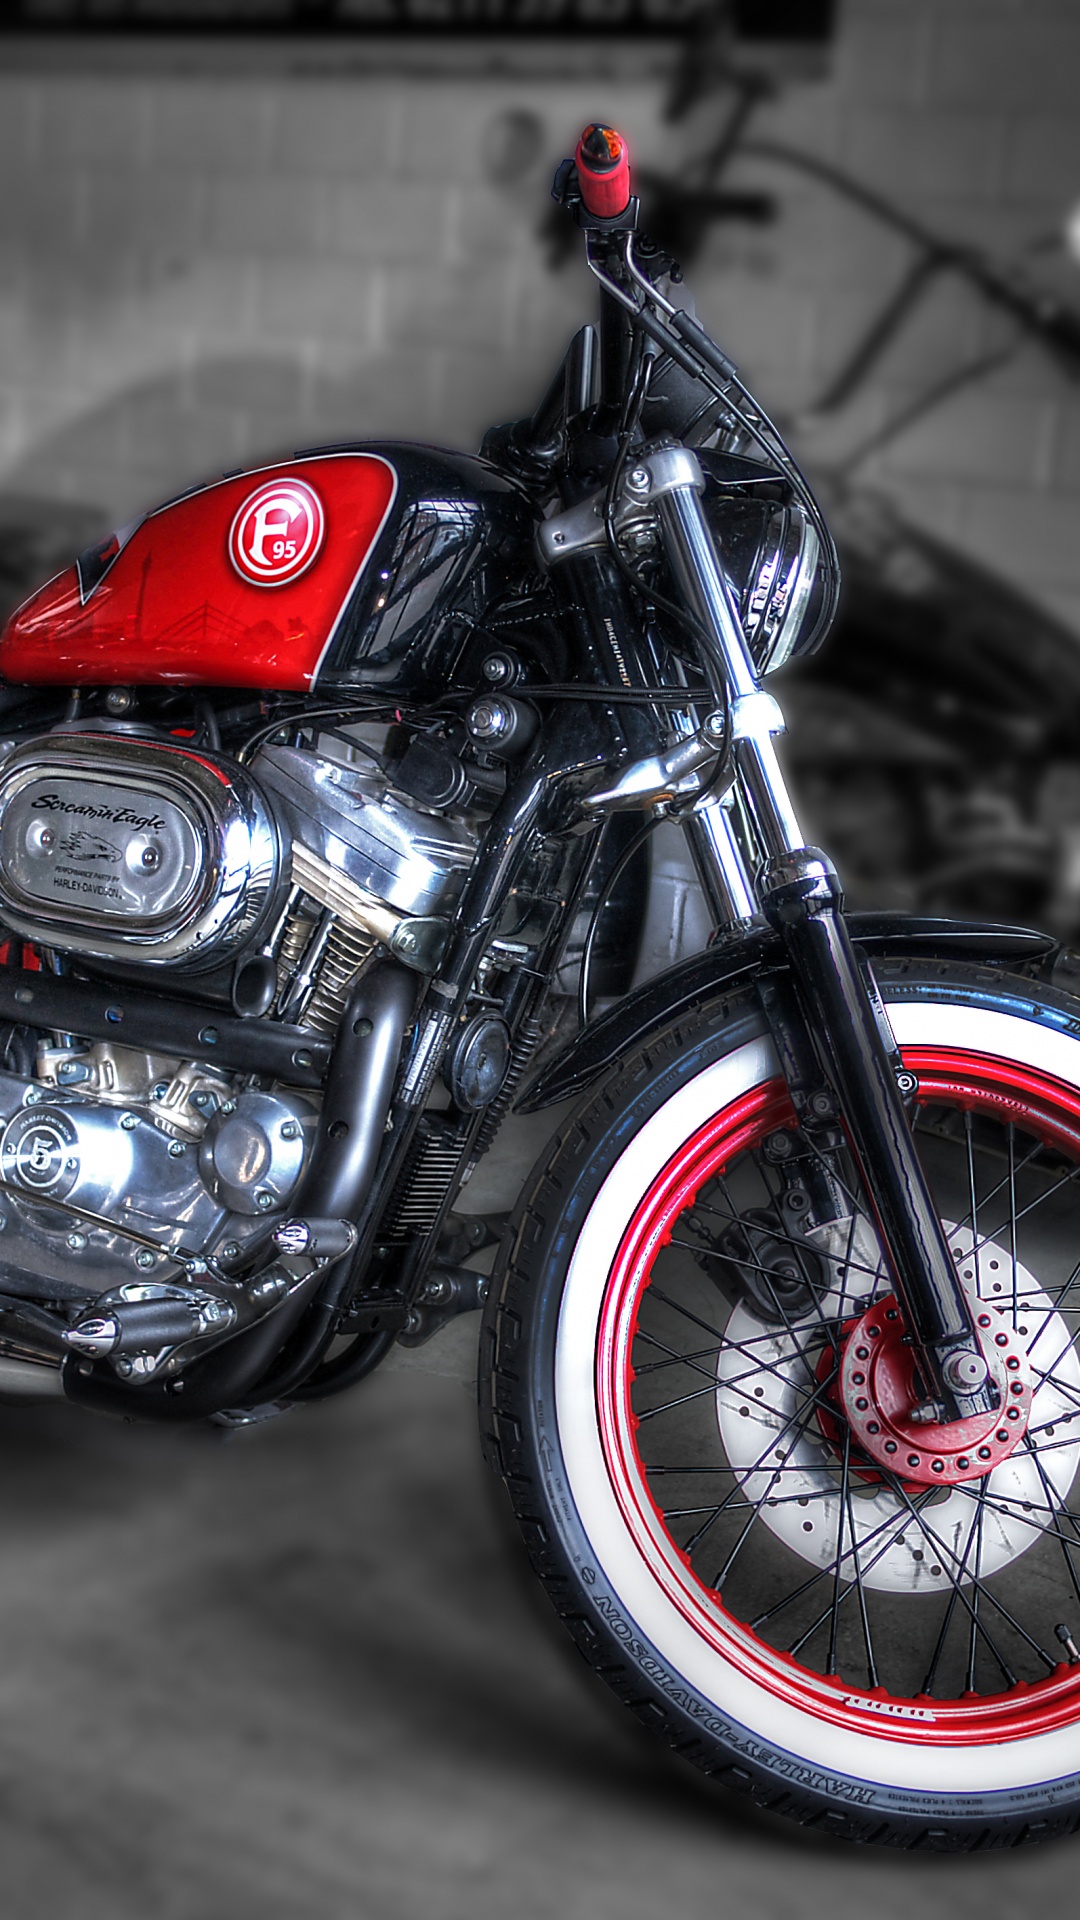 Motocicleta Cruiser Roja y Negra. Wallpaper in 1080x1920 Resolution